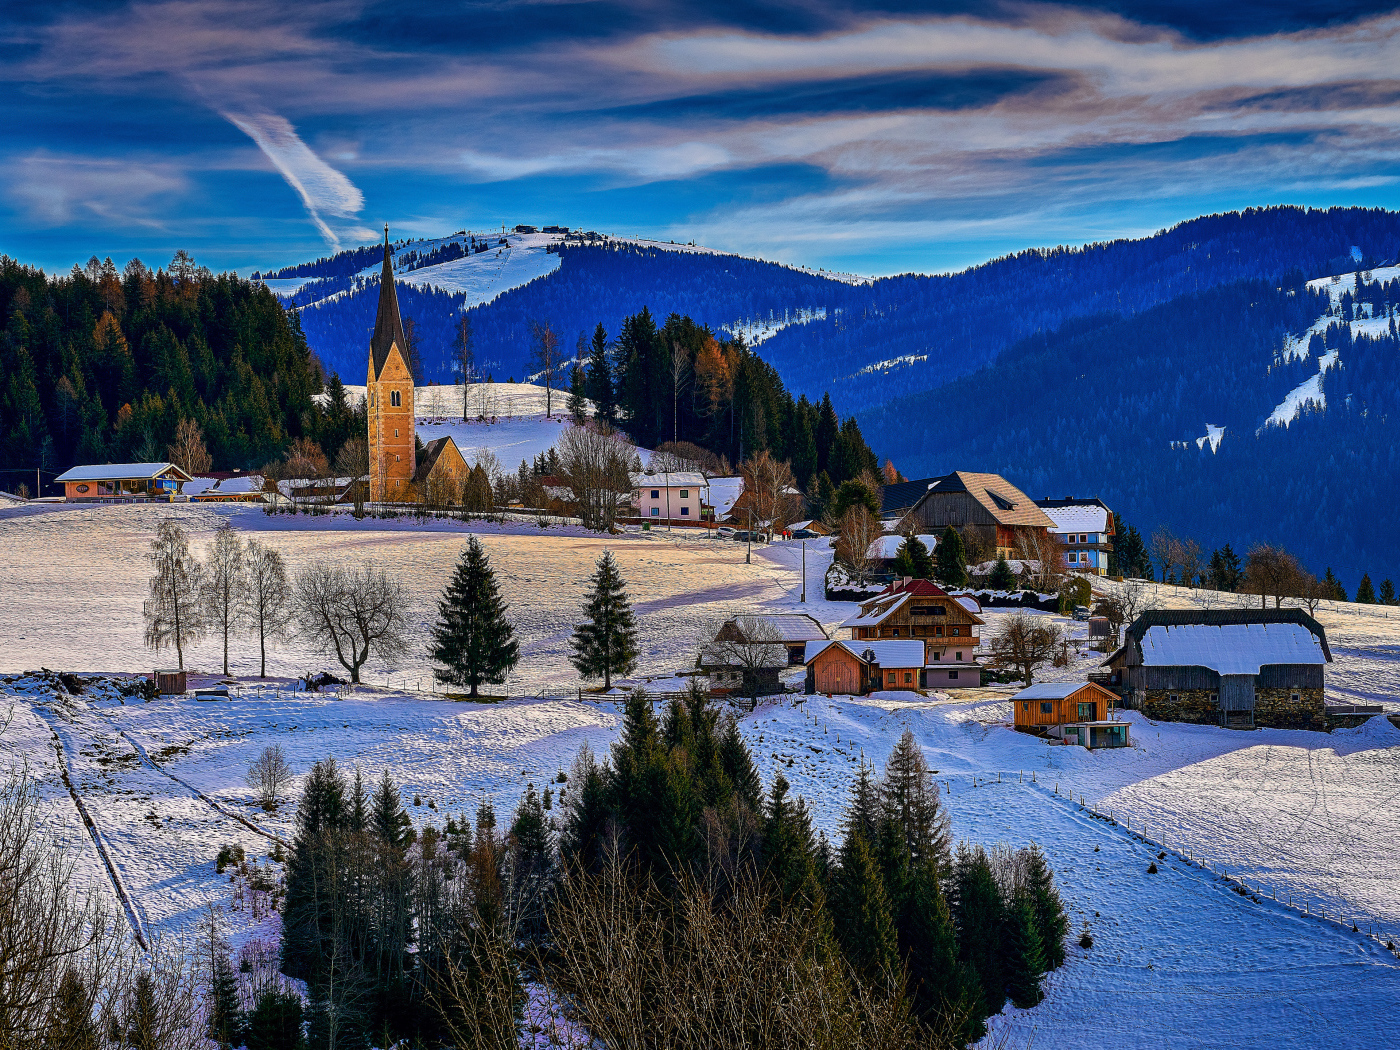 Calm winter city in the mountains, Austria